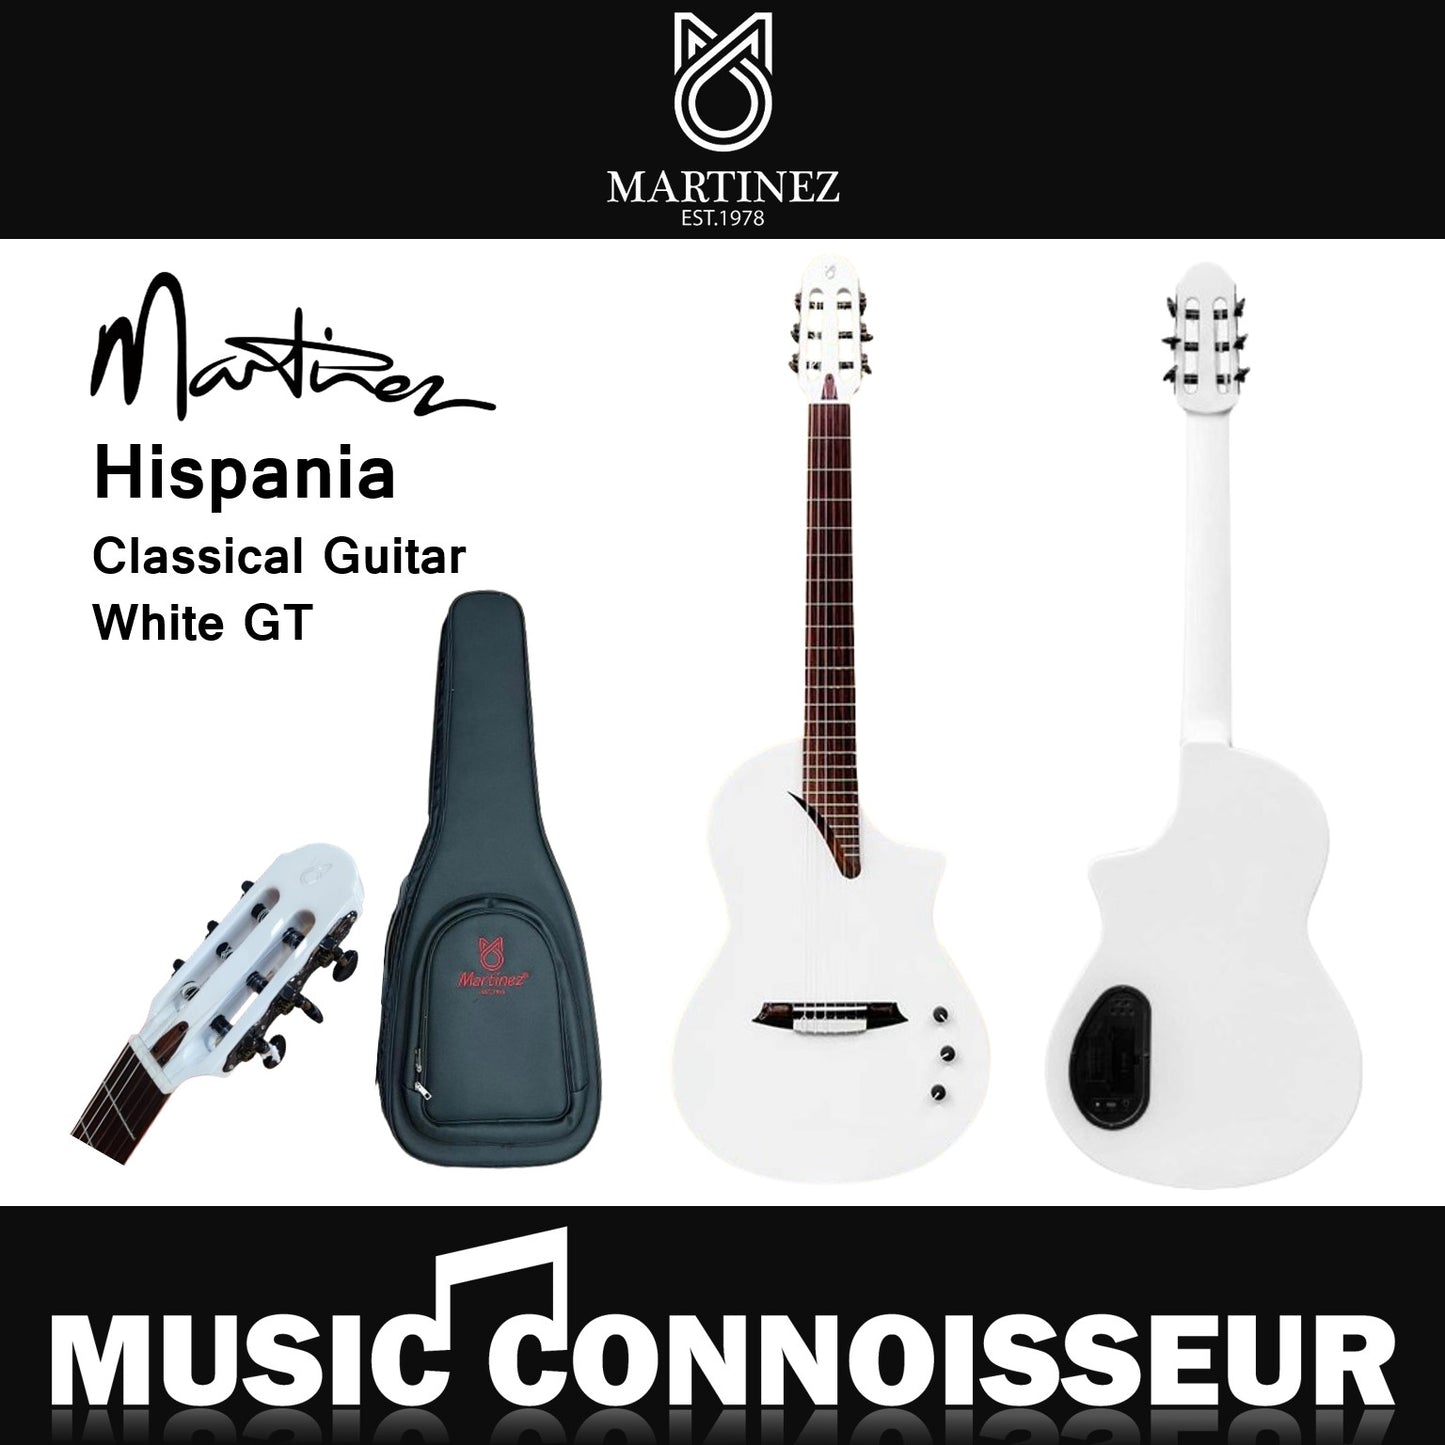 Martinez Hispania Classical Guitar White GT